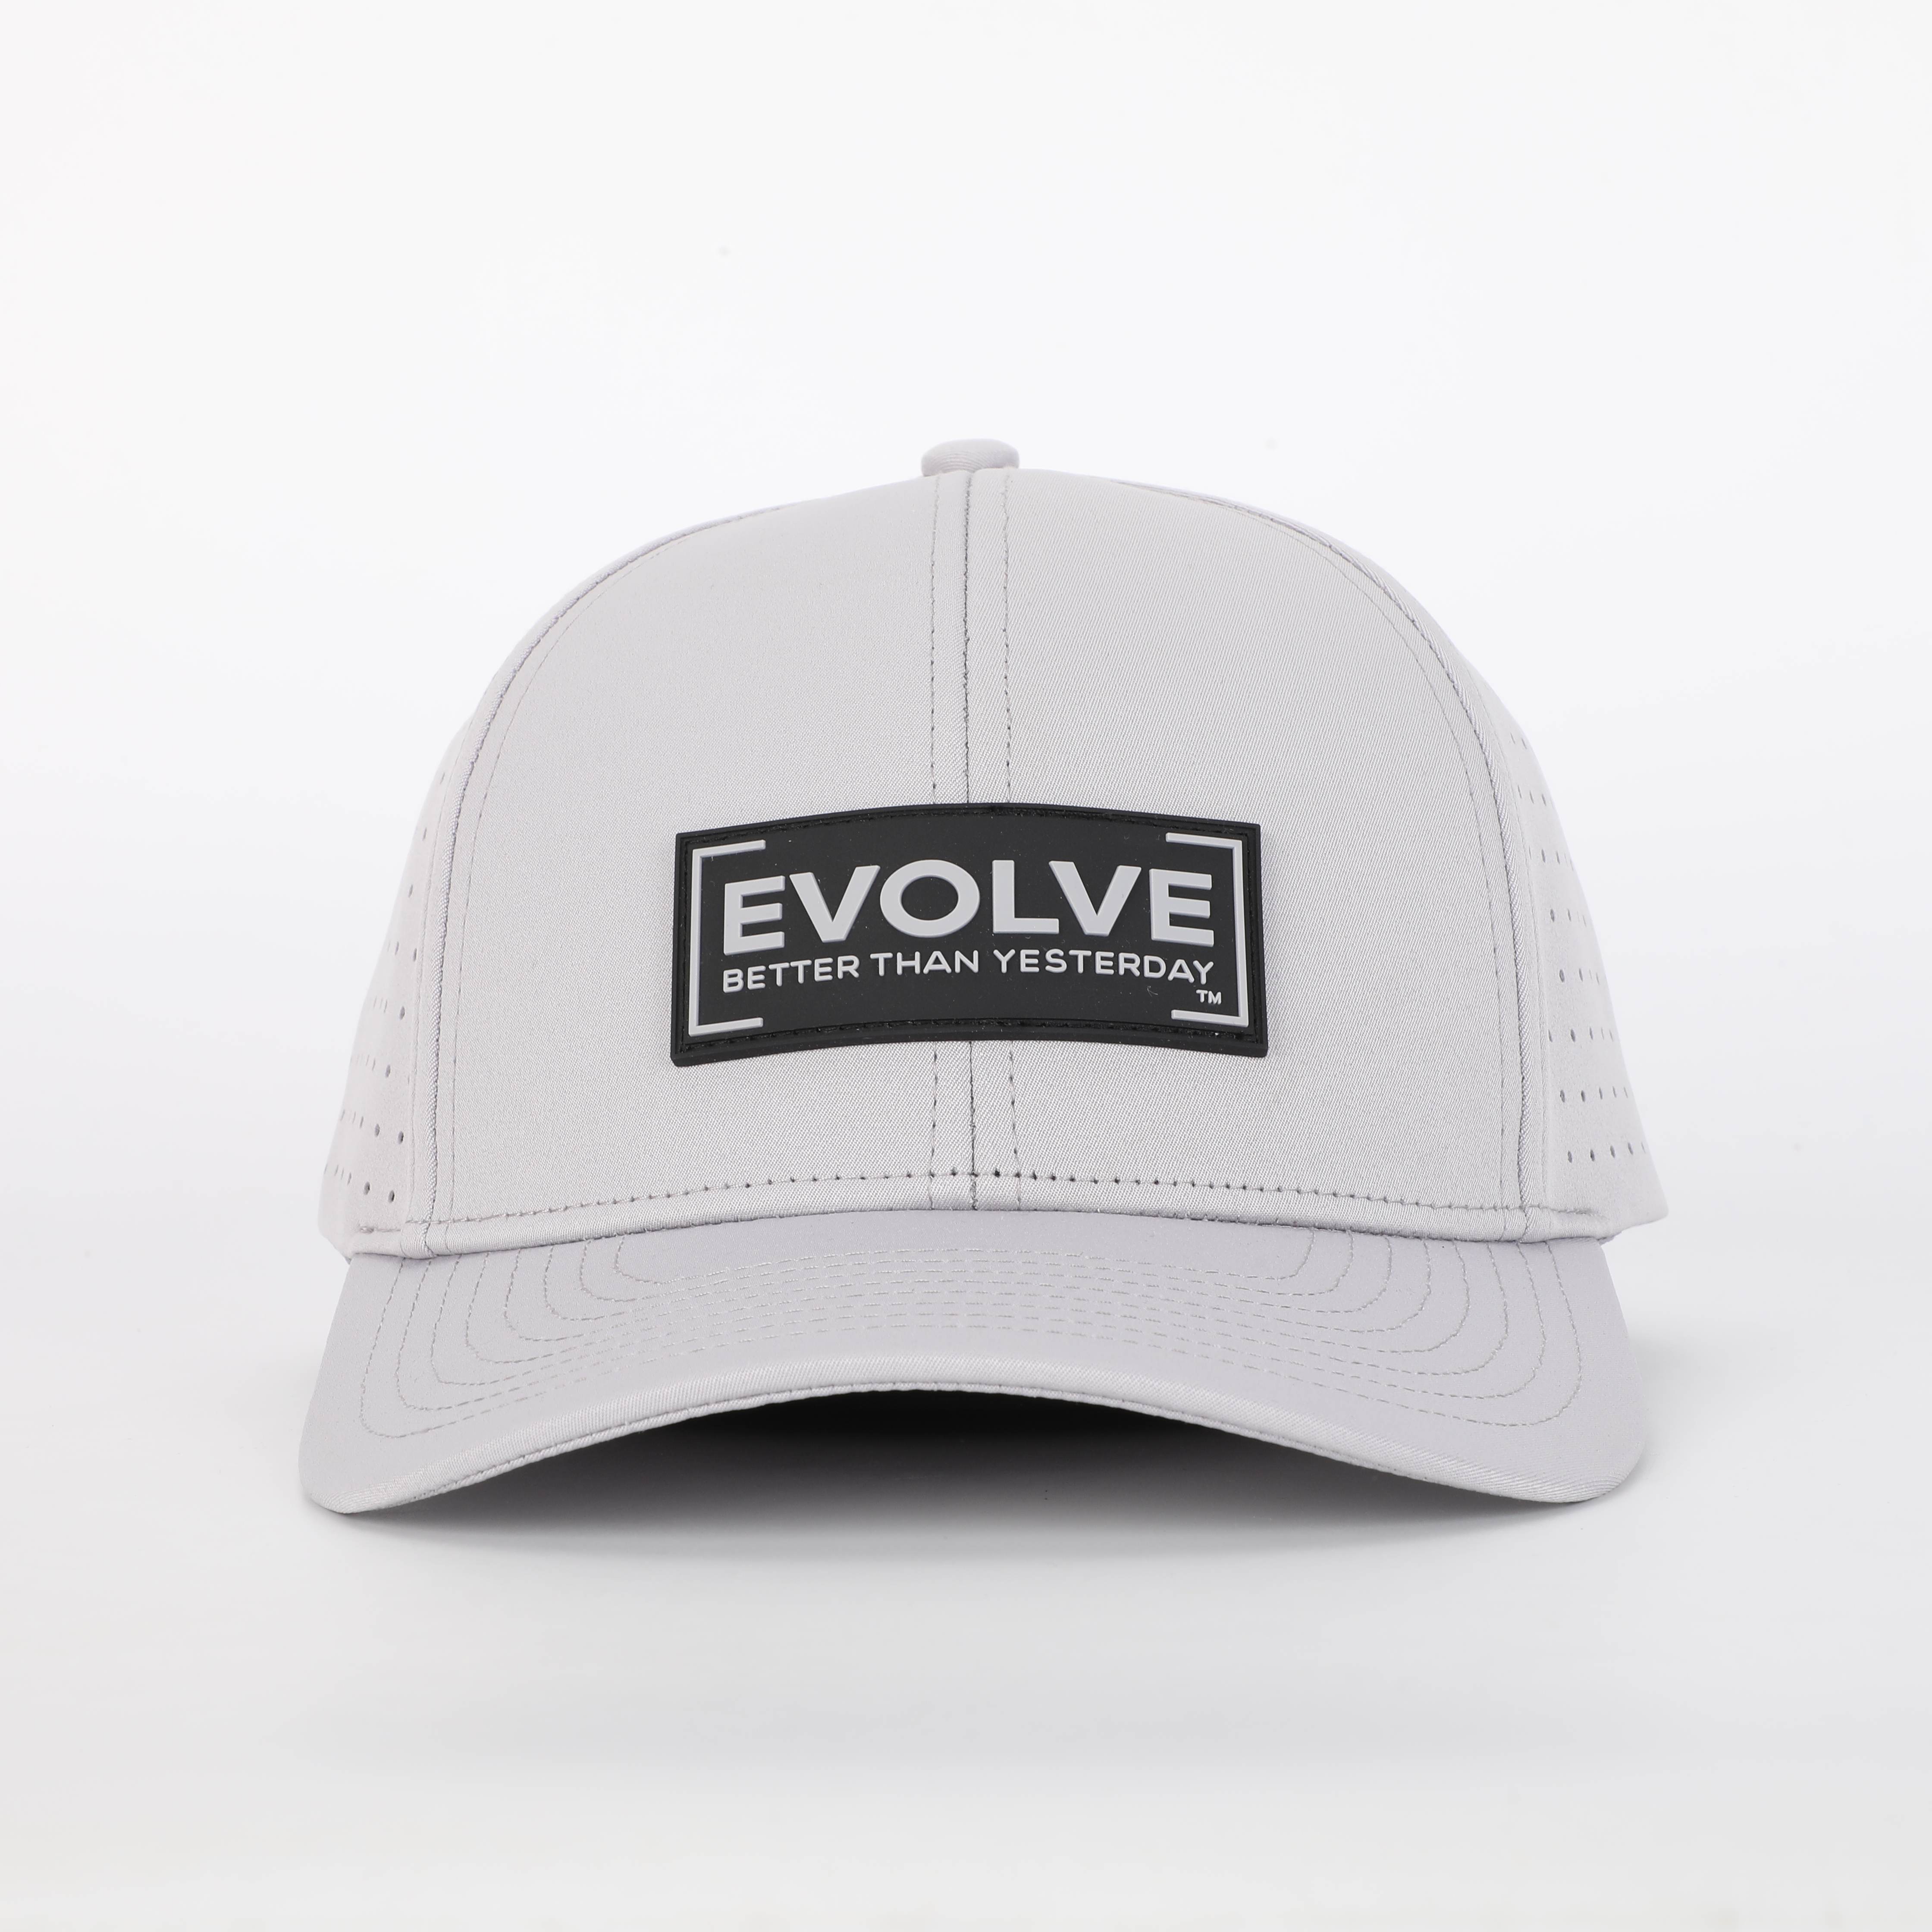 EVOLVE "Better Than Yesterday" Snapback Hat for Men and Women (Polyester Blend, Gray/Black)